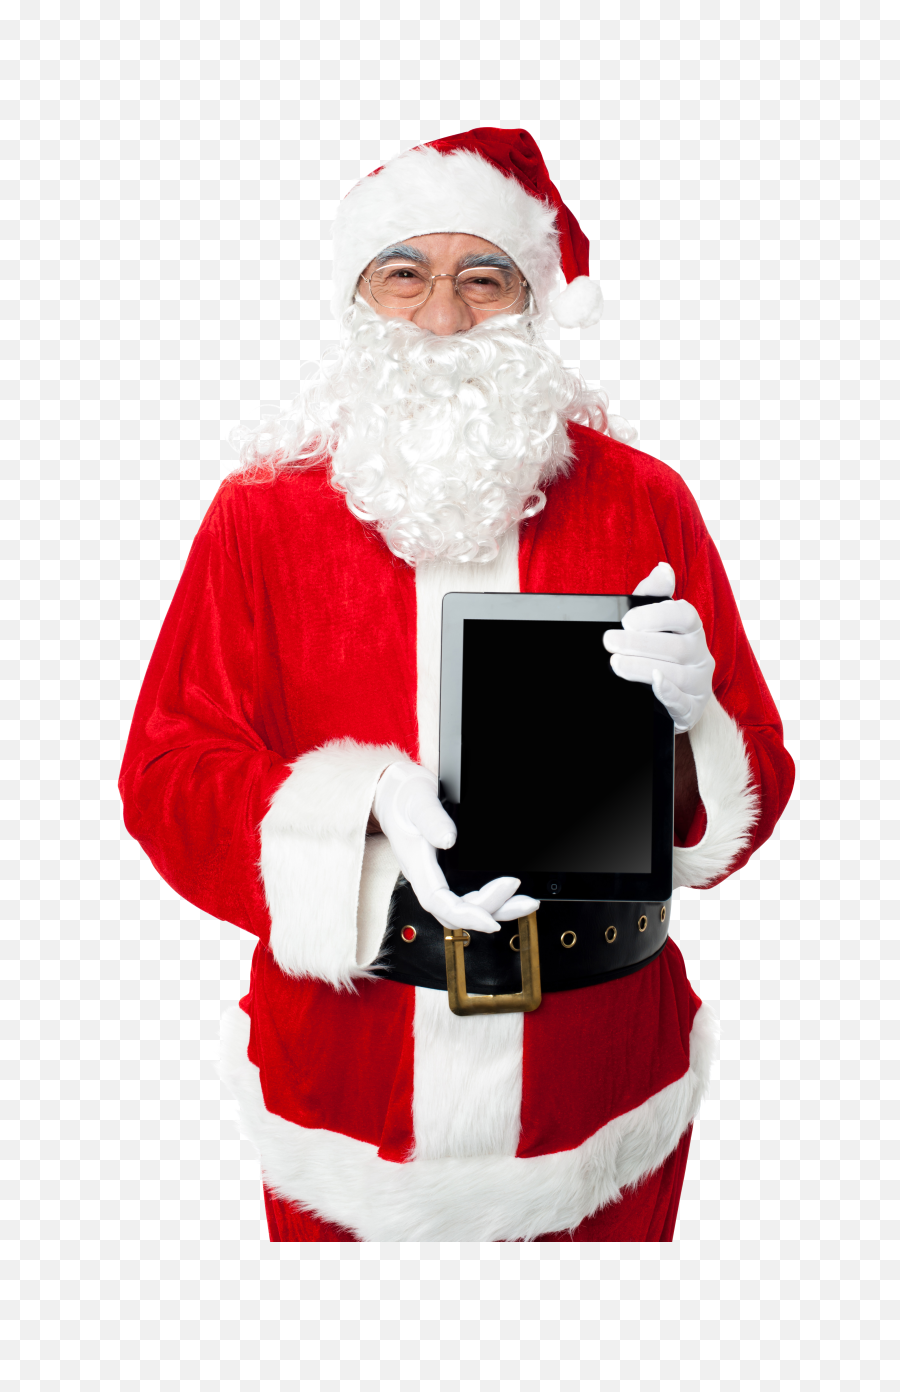 Santa Claus Holding Ipad Png Image Beard Transparent Background